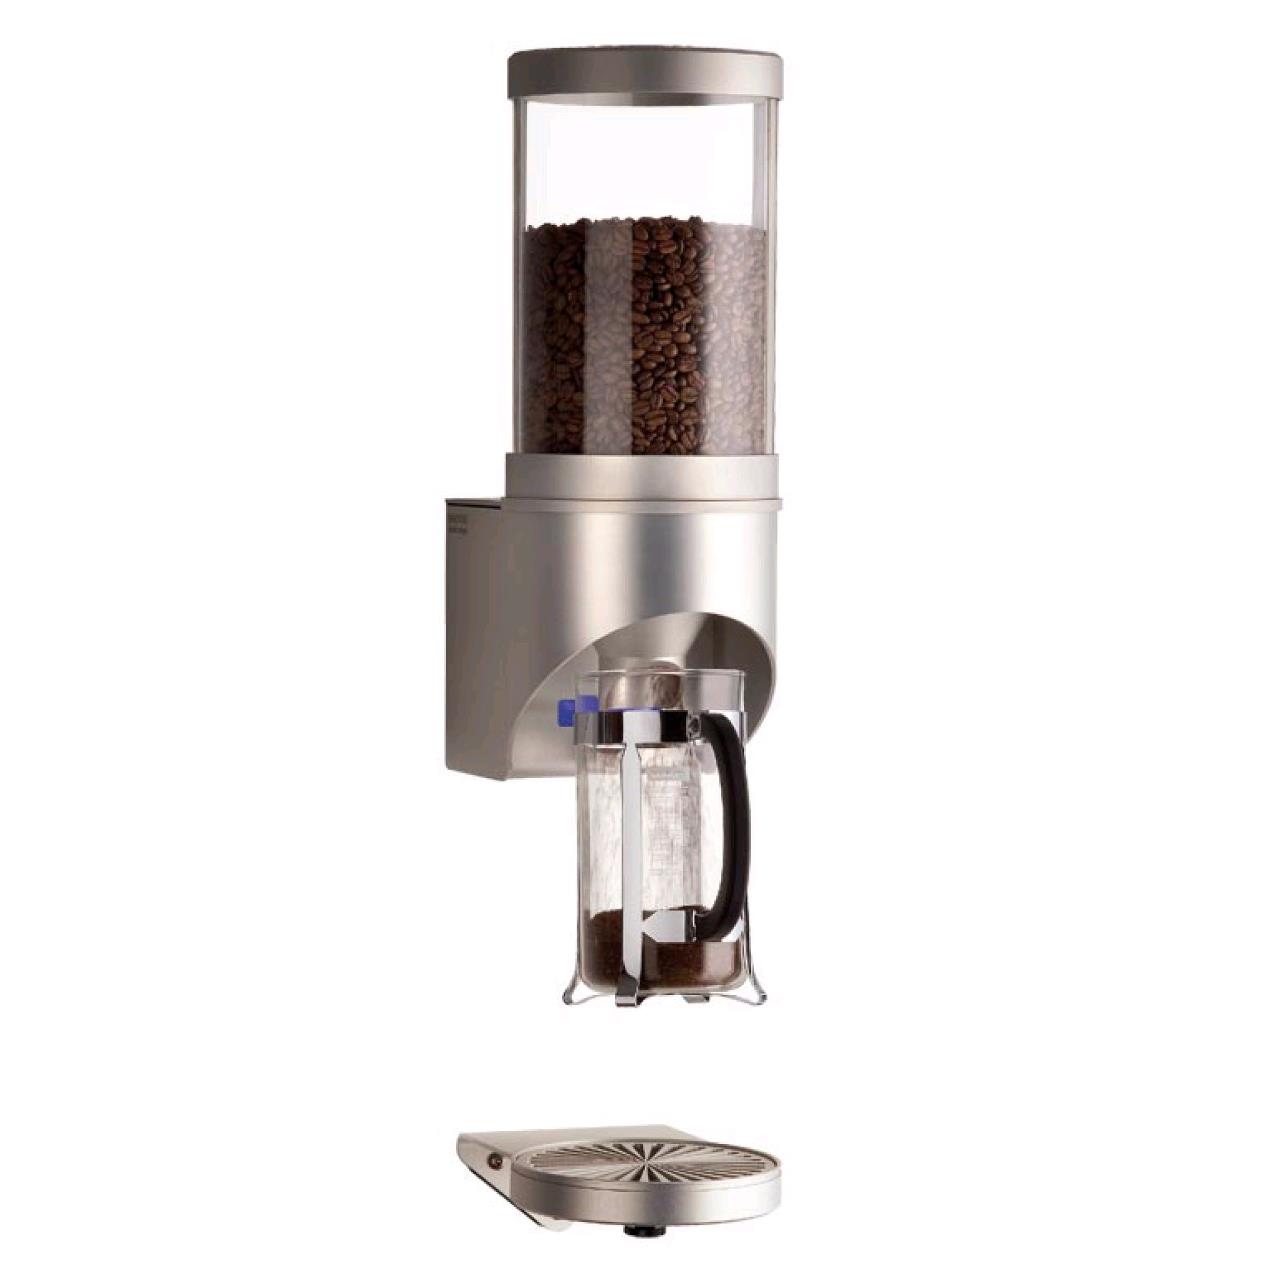 Kaffekværn - Kaffekværn til stempelkande